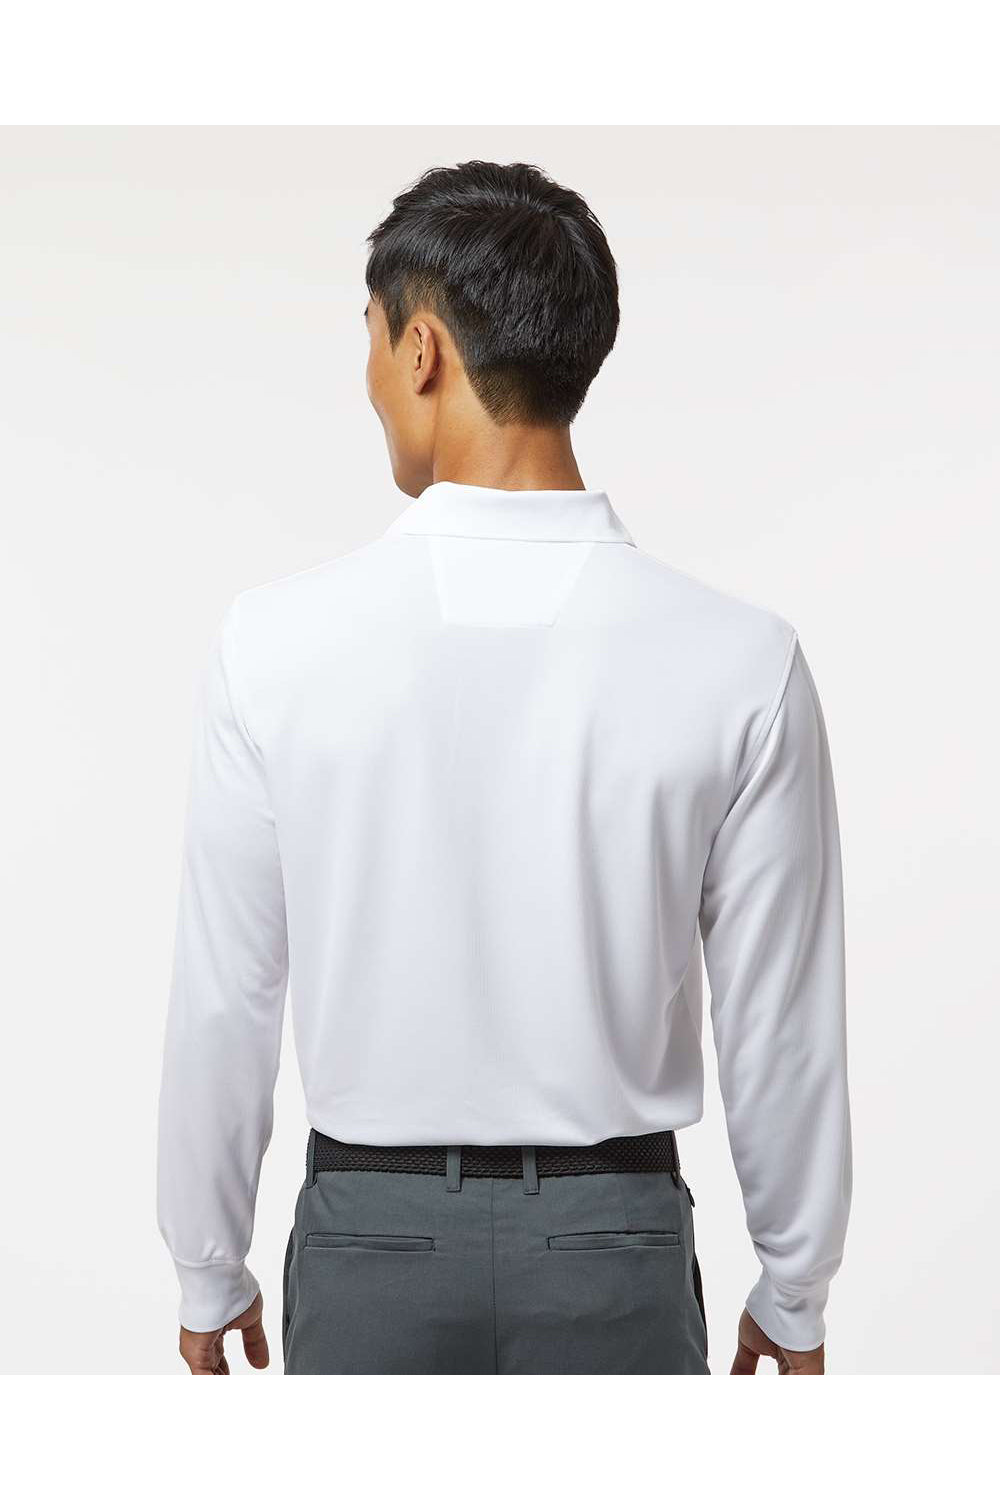 Paragon 110 Mens Prescott Long Sleeve Polo Shirt White Model Back